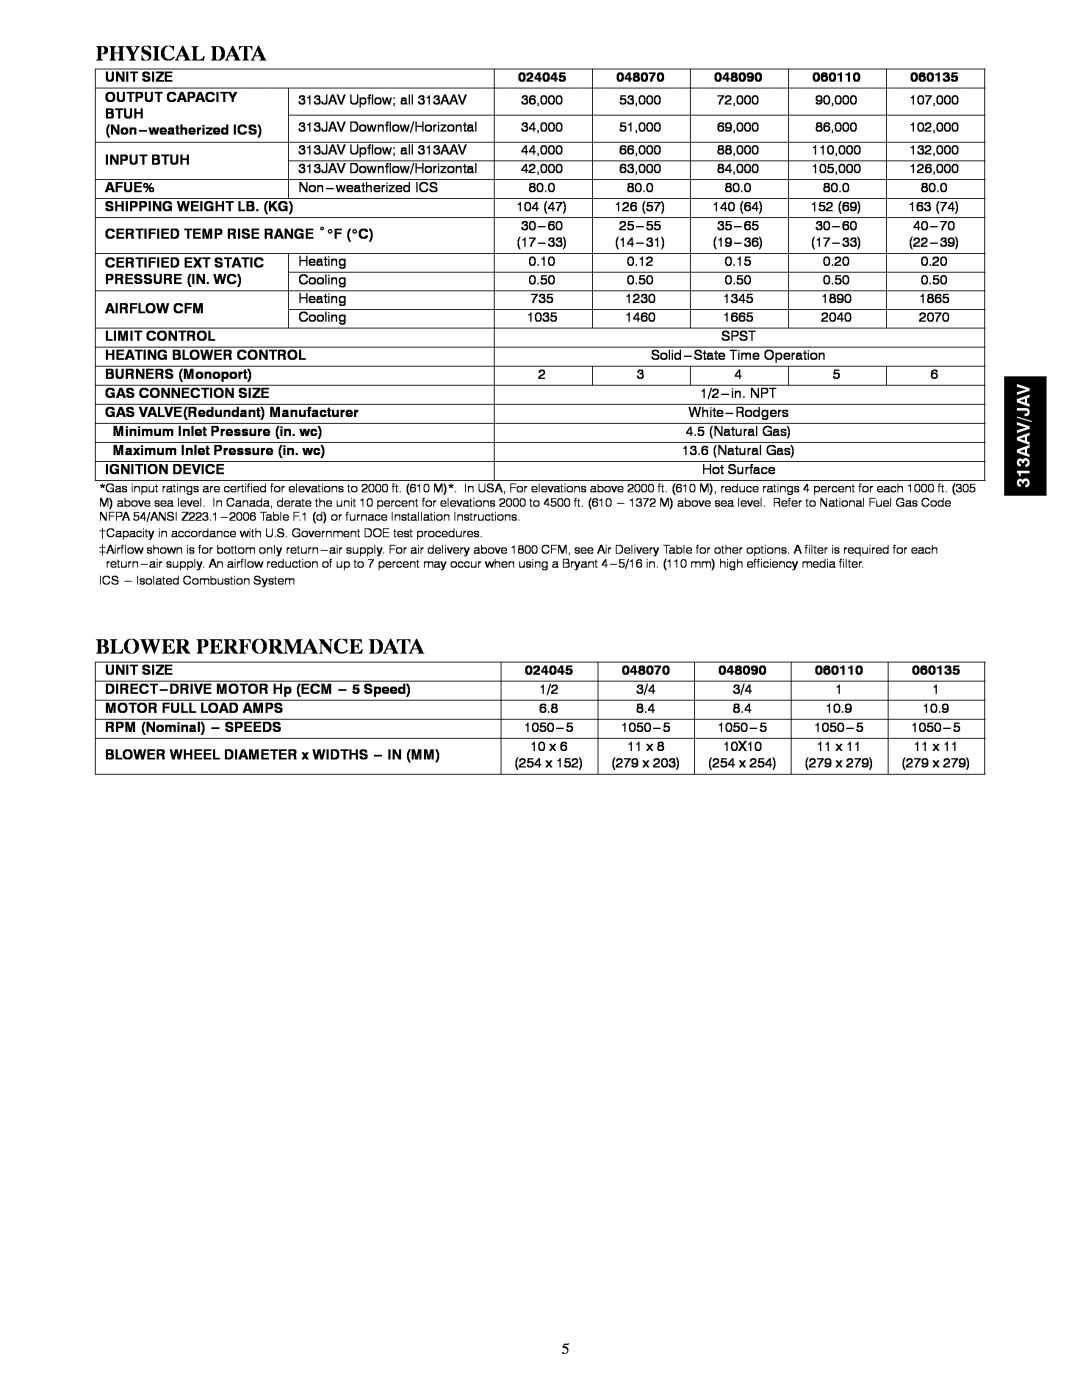 Bryant 313AAV/JAV manual Physical Data, Blower Performance Data, Natural Gas, Hot Surface, 254 